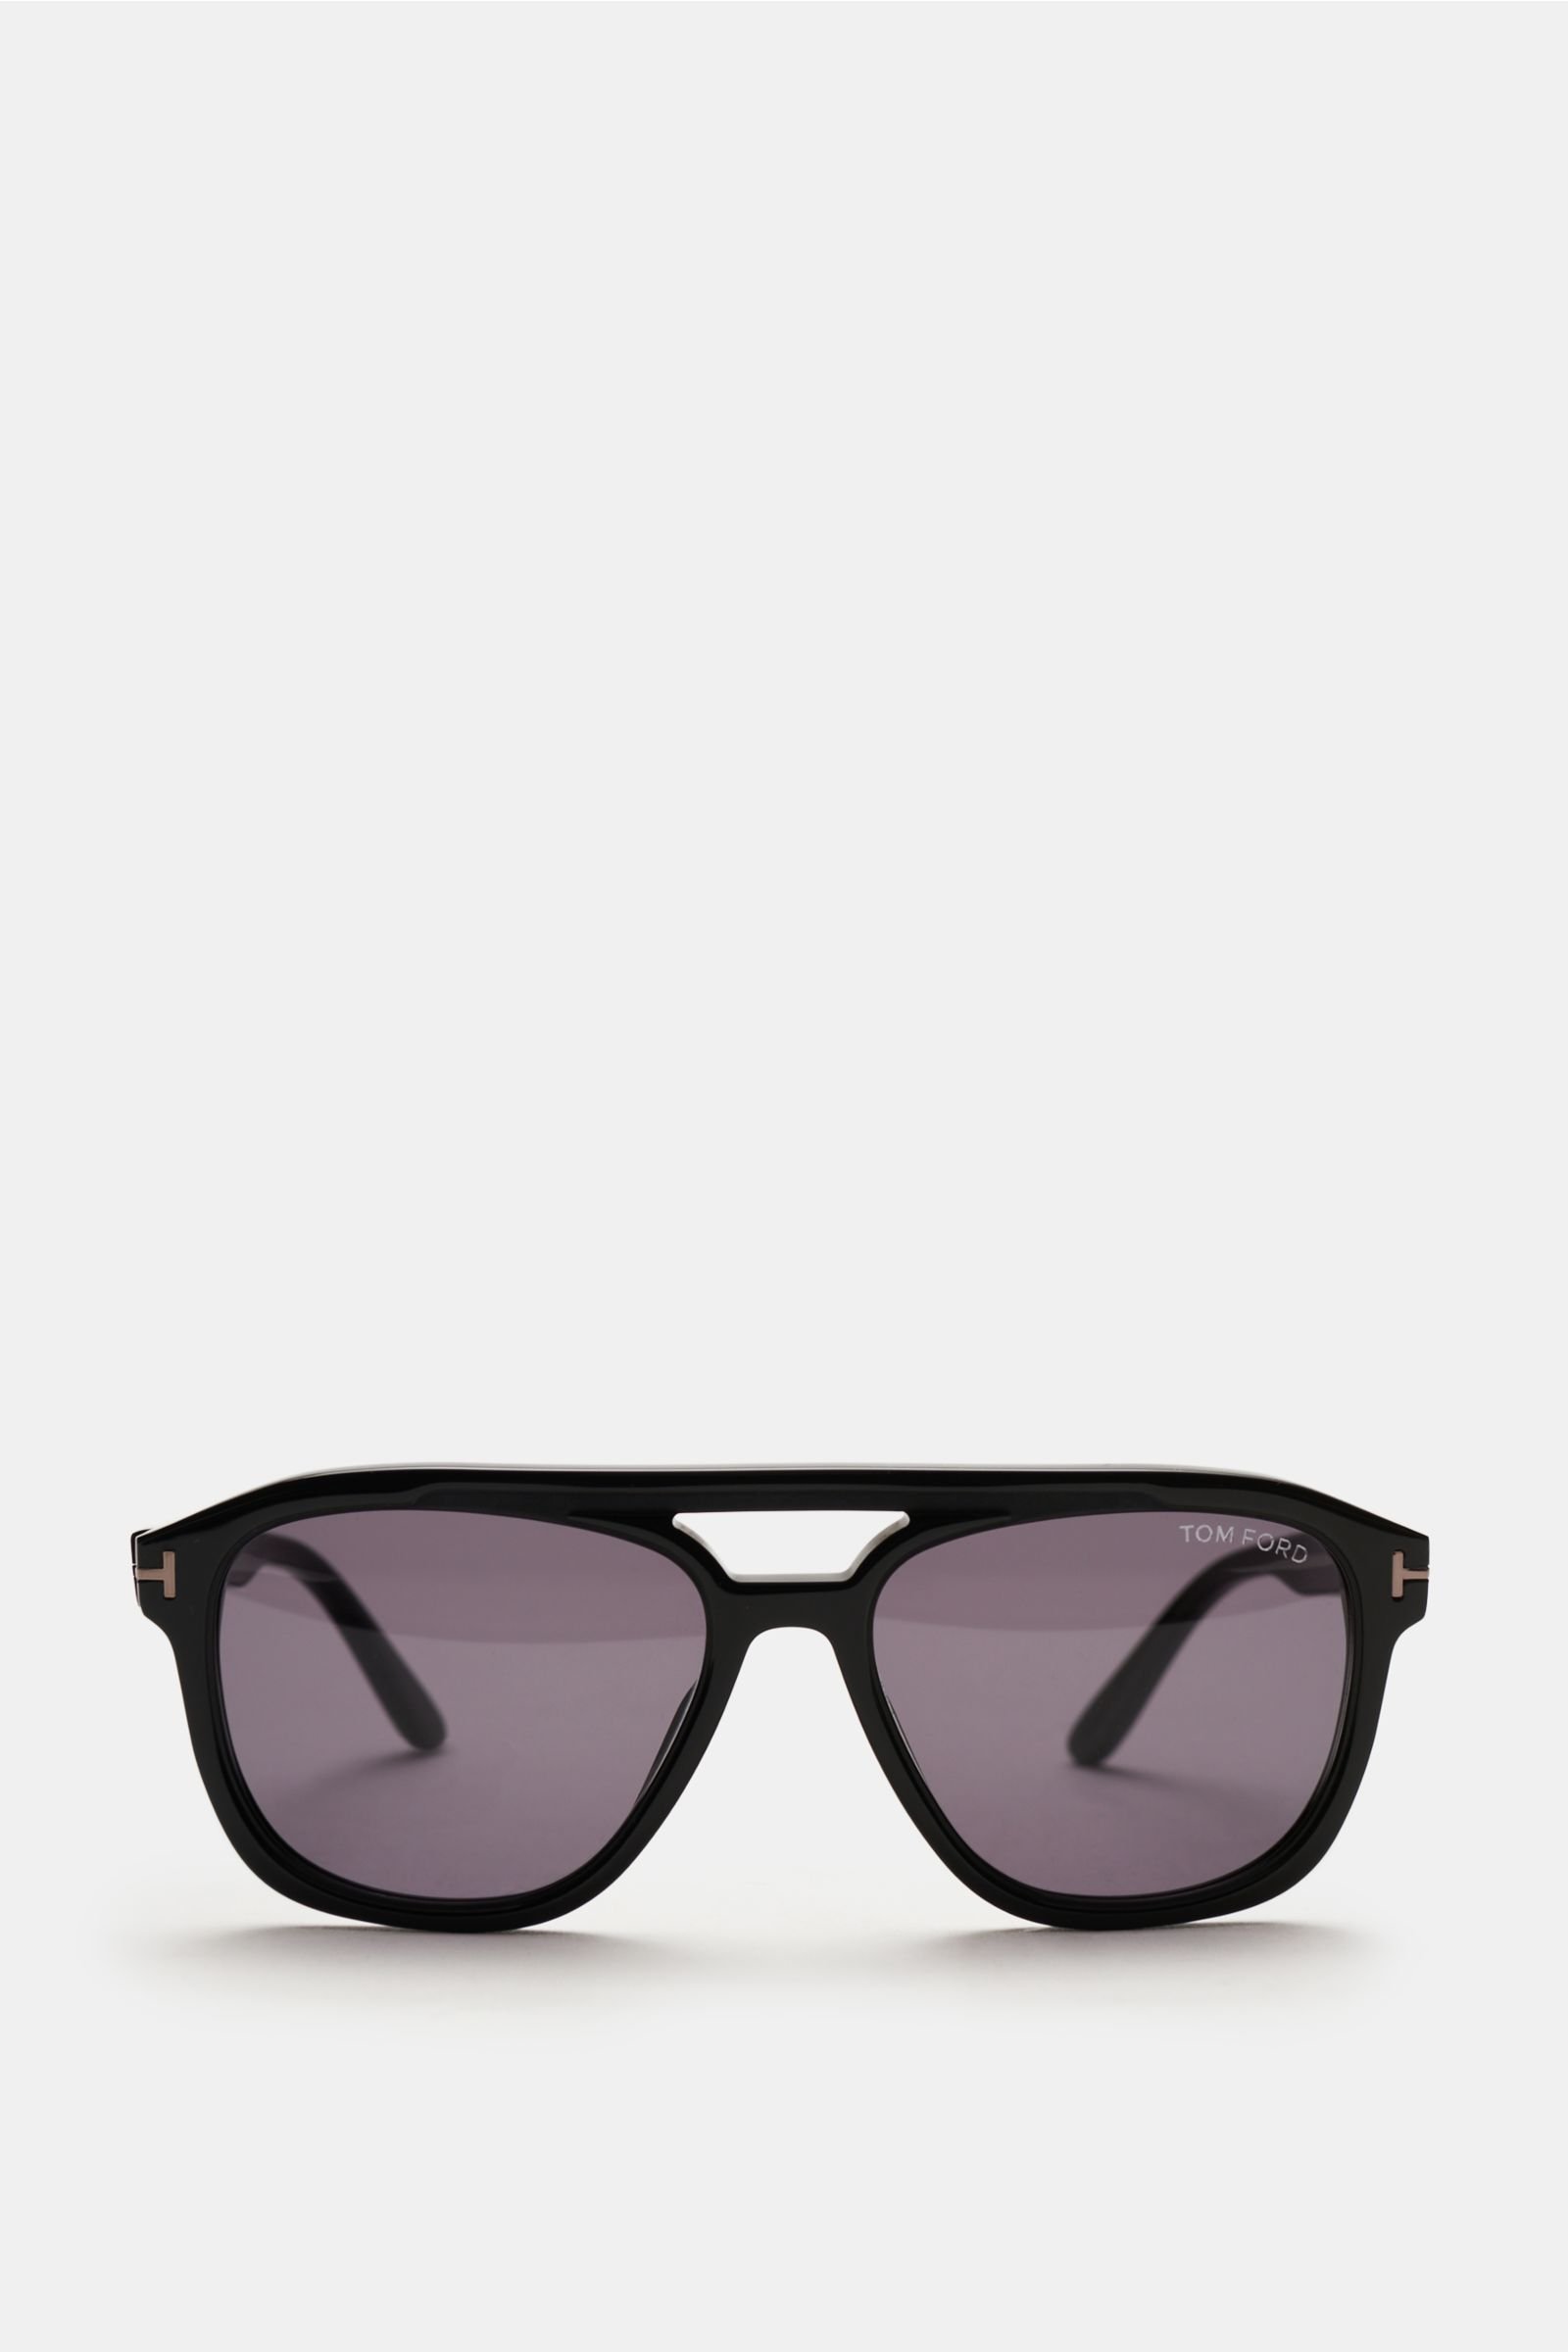 Sunglasses 'Gerrard' black/grey